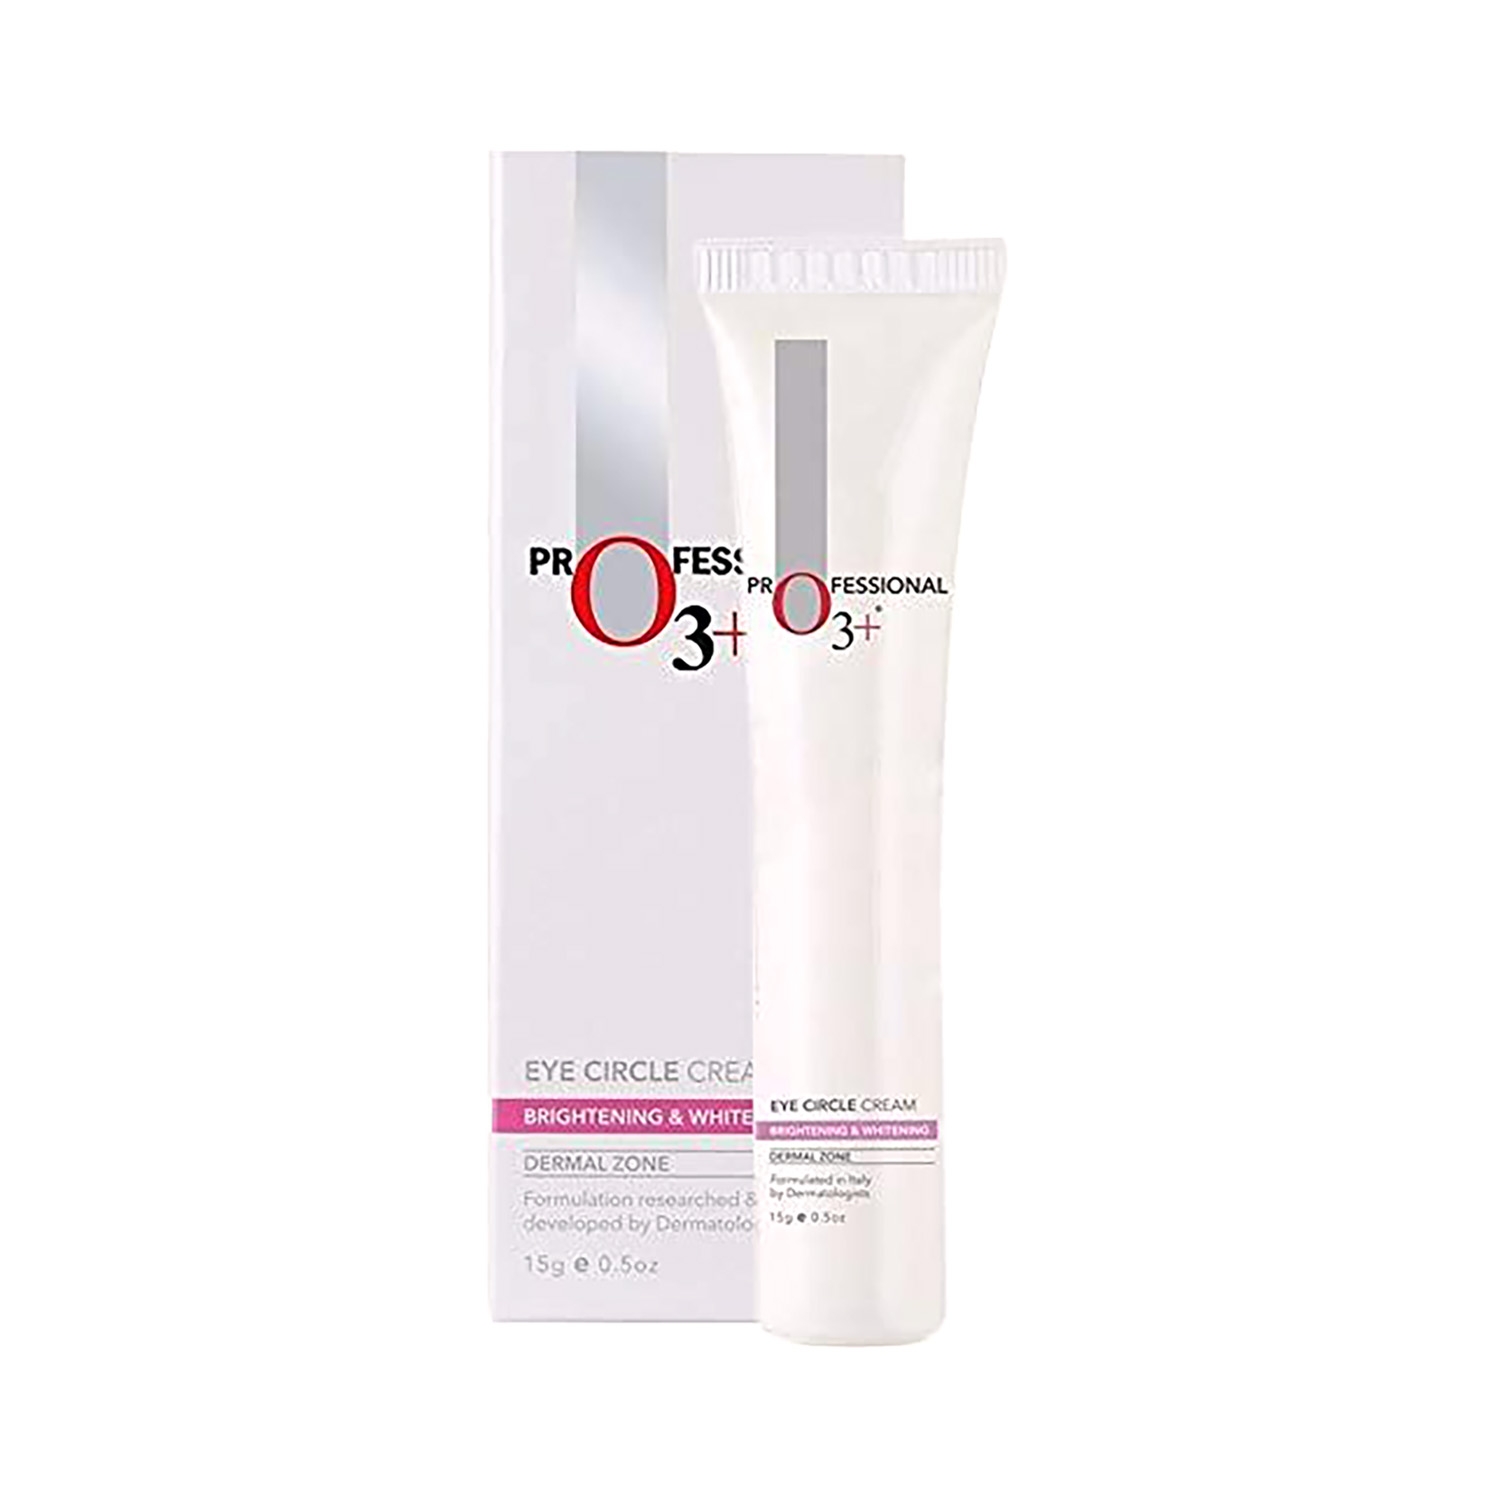 O3+ Professional Eye Circle Cream (15g)